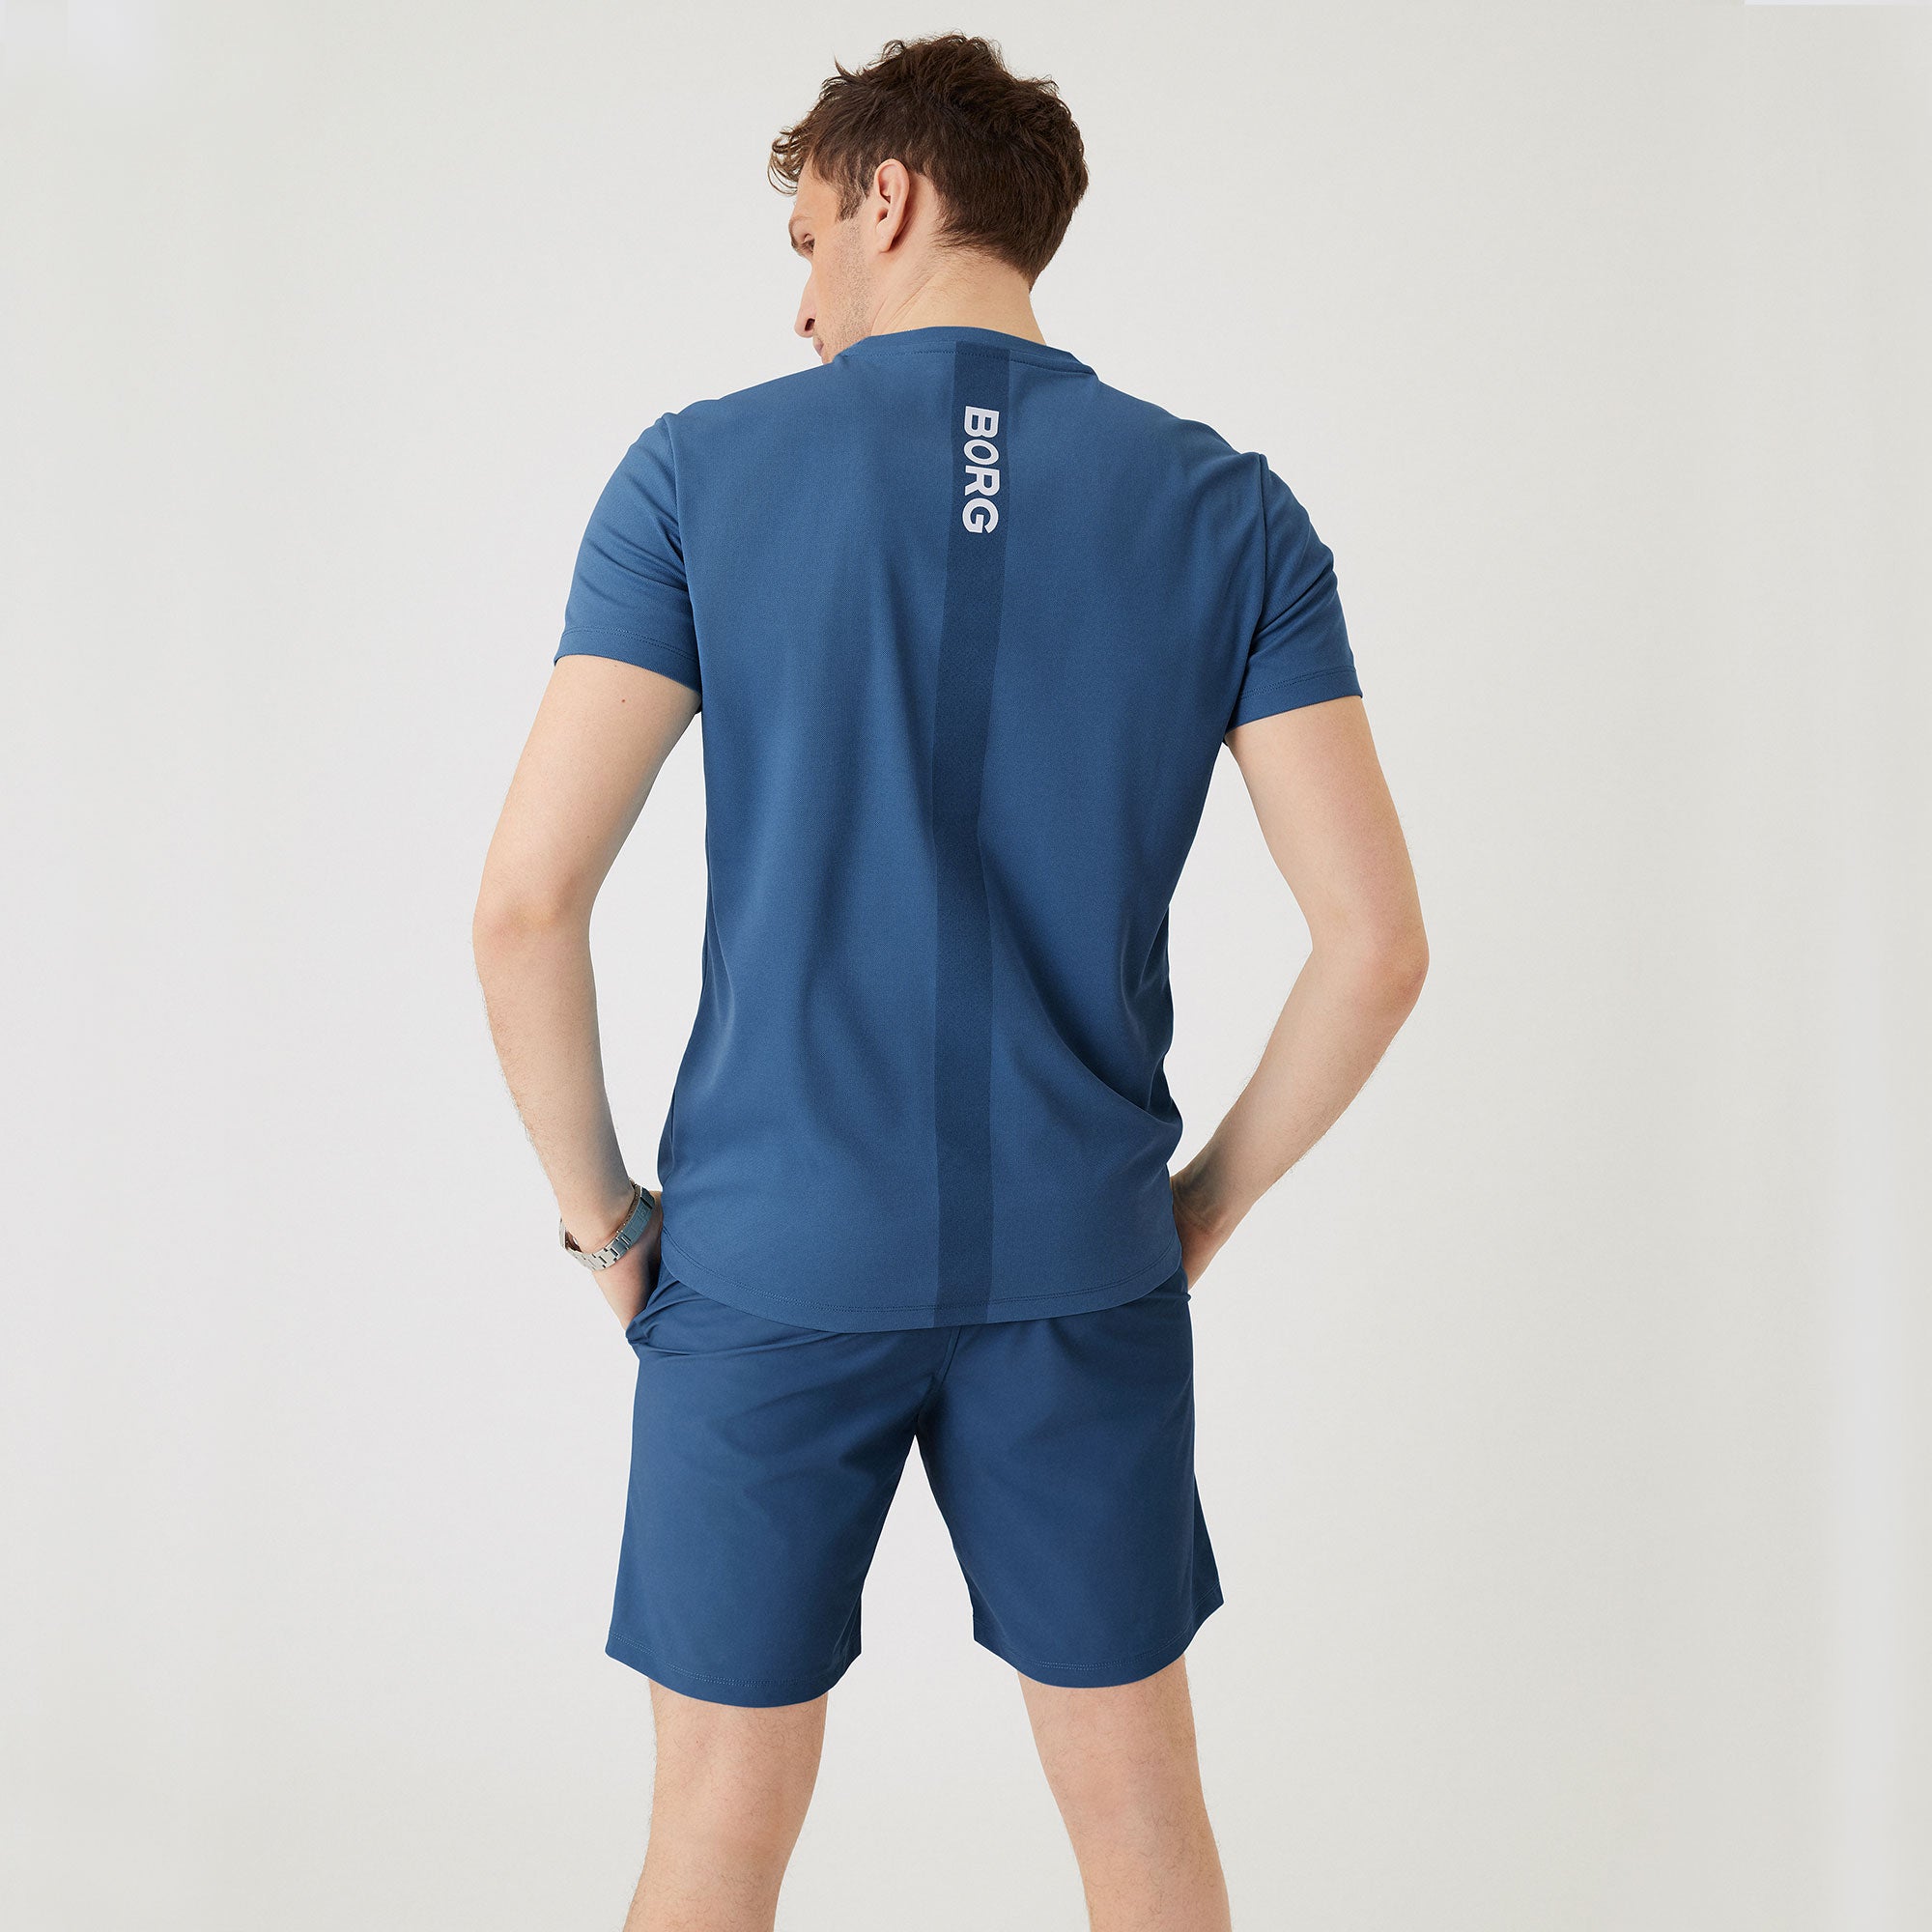 Björn Borg Ace Men's Stripe Tennis Shirt Blue (2)